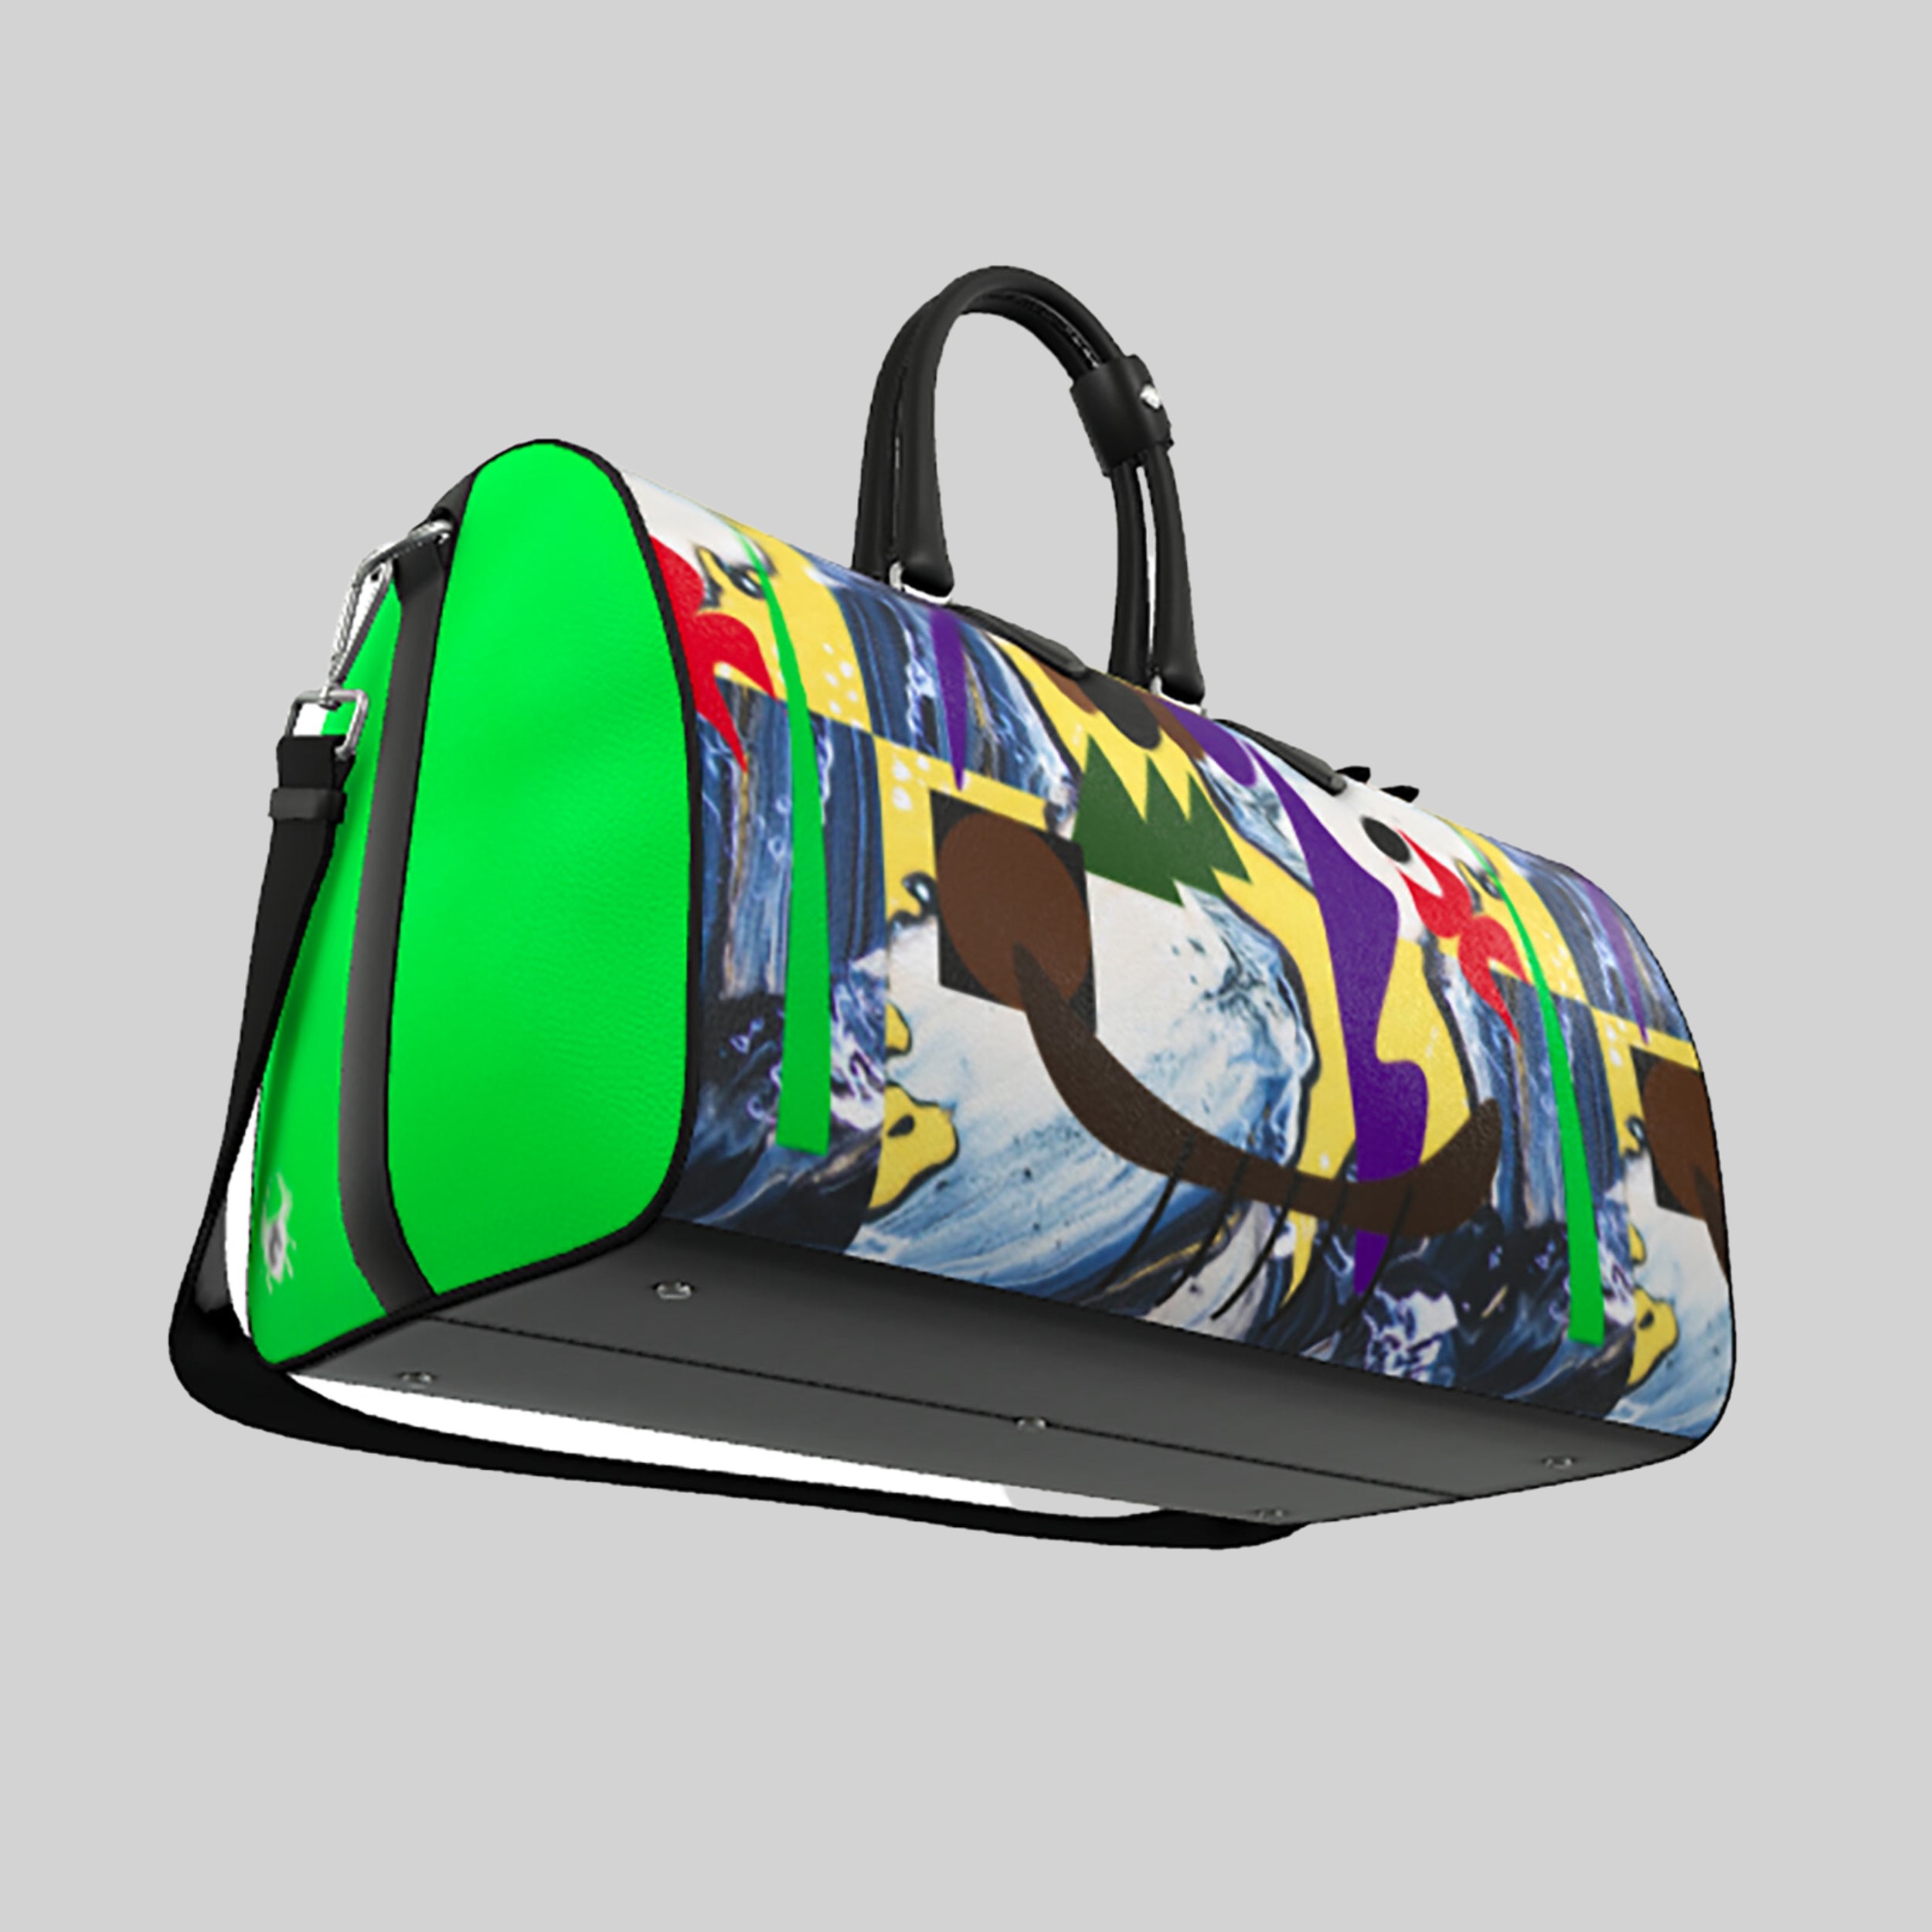 Louis Vuitton Black With Rainbow Letterings Duffel Bag